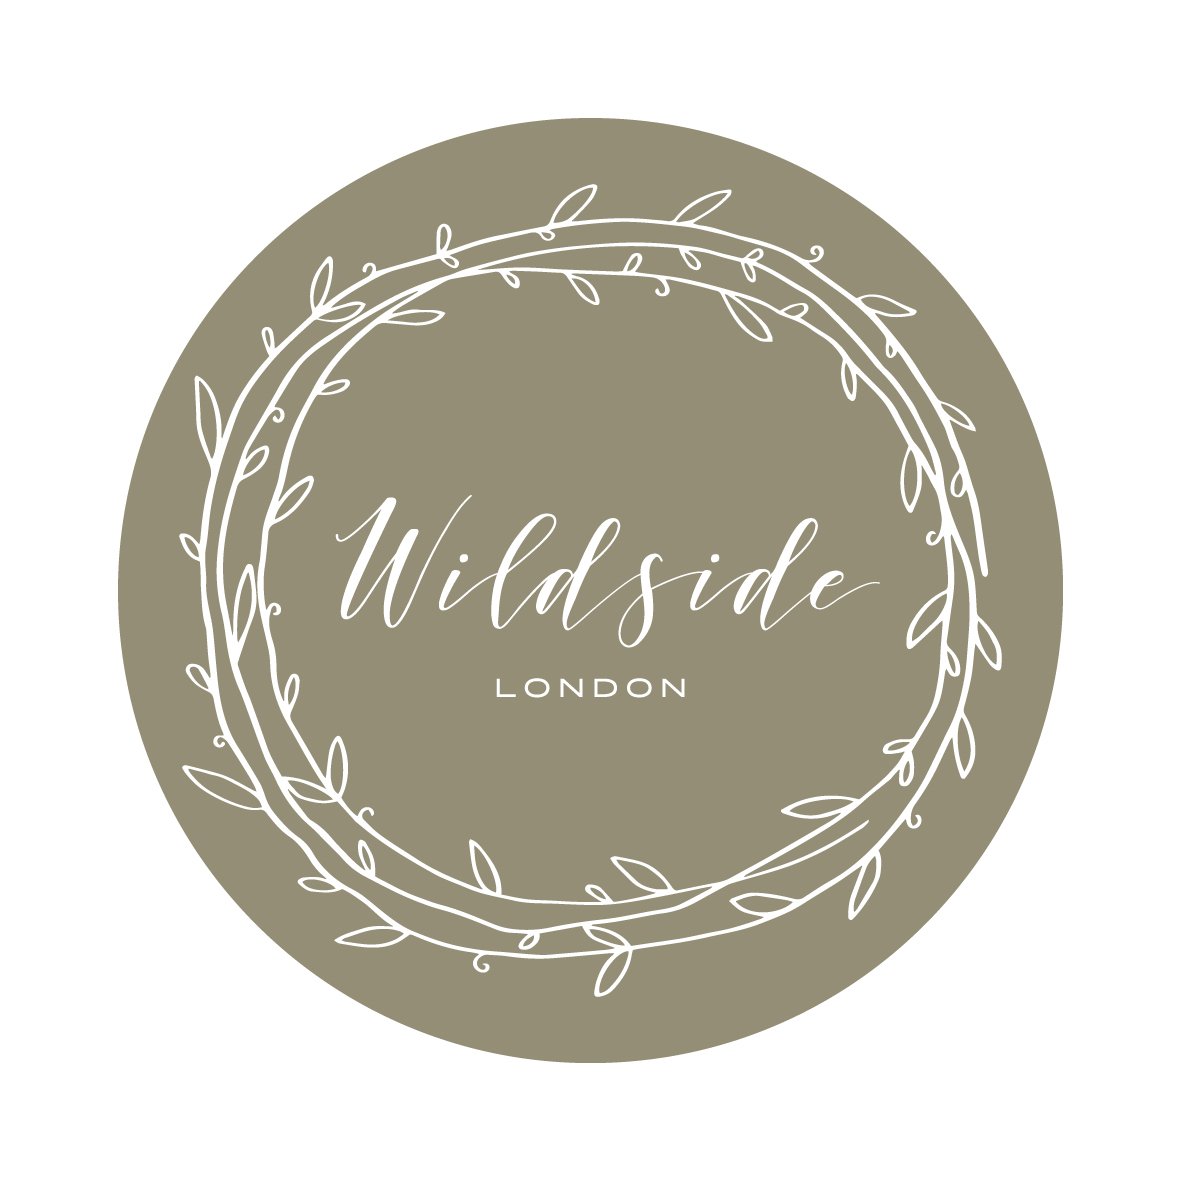 Wildside London Christmas Wreath workshop 
@ The Woodhouse Pub, Dulwich 

Fri 1st Dec at 1pm or Monday 4th Dec at 7pm